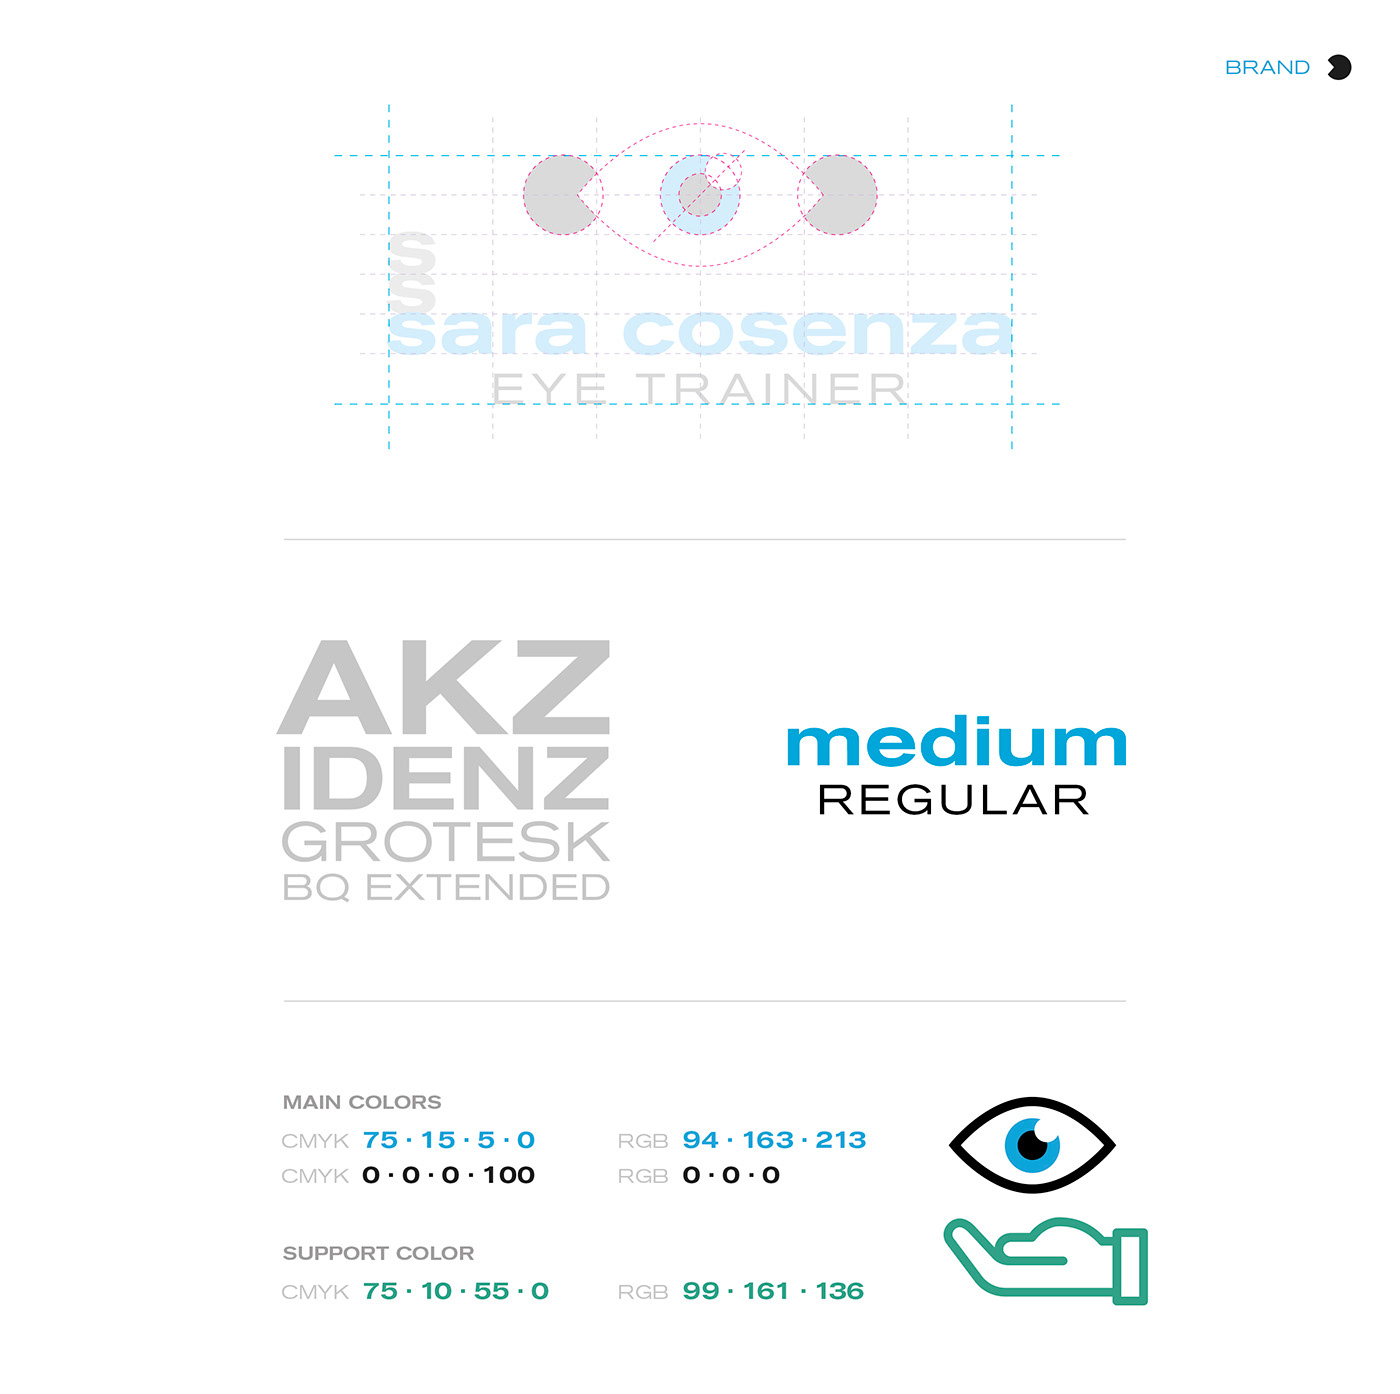 Logo Design branding  gestalt optical illusion eye sight psychology